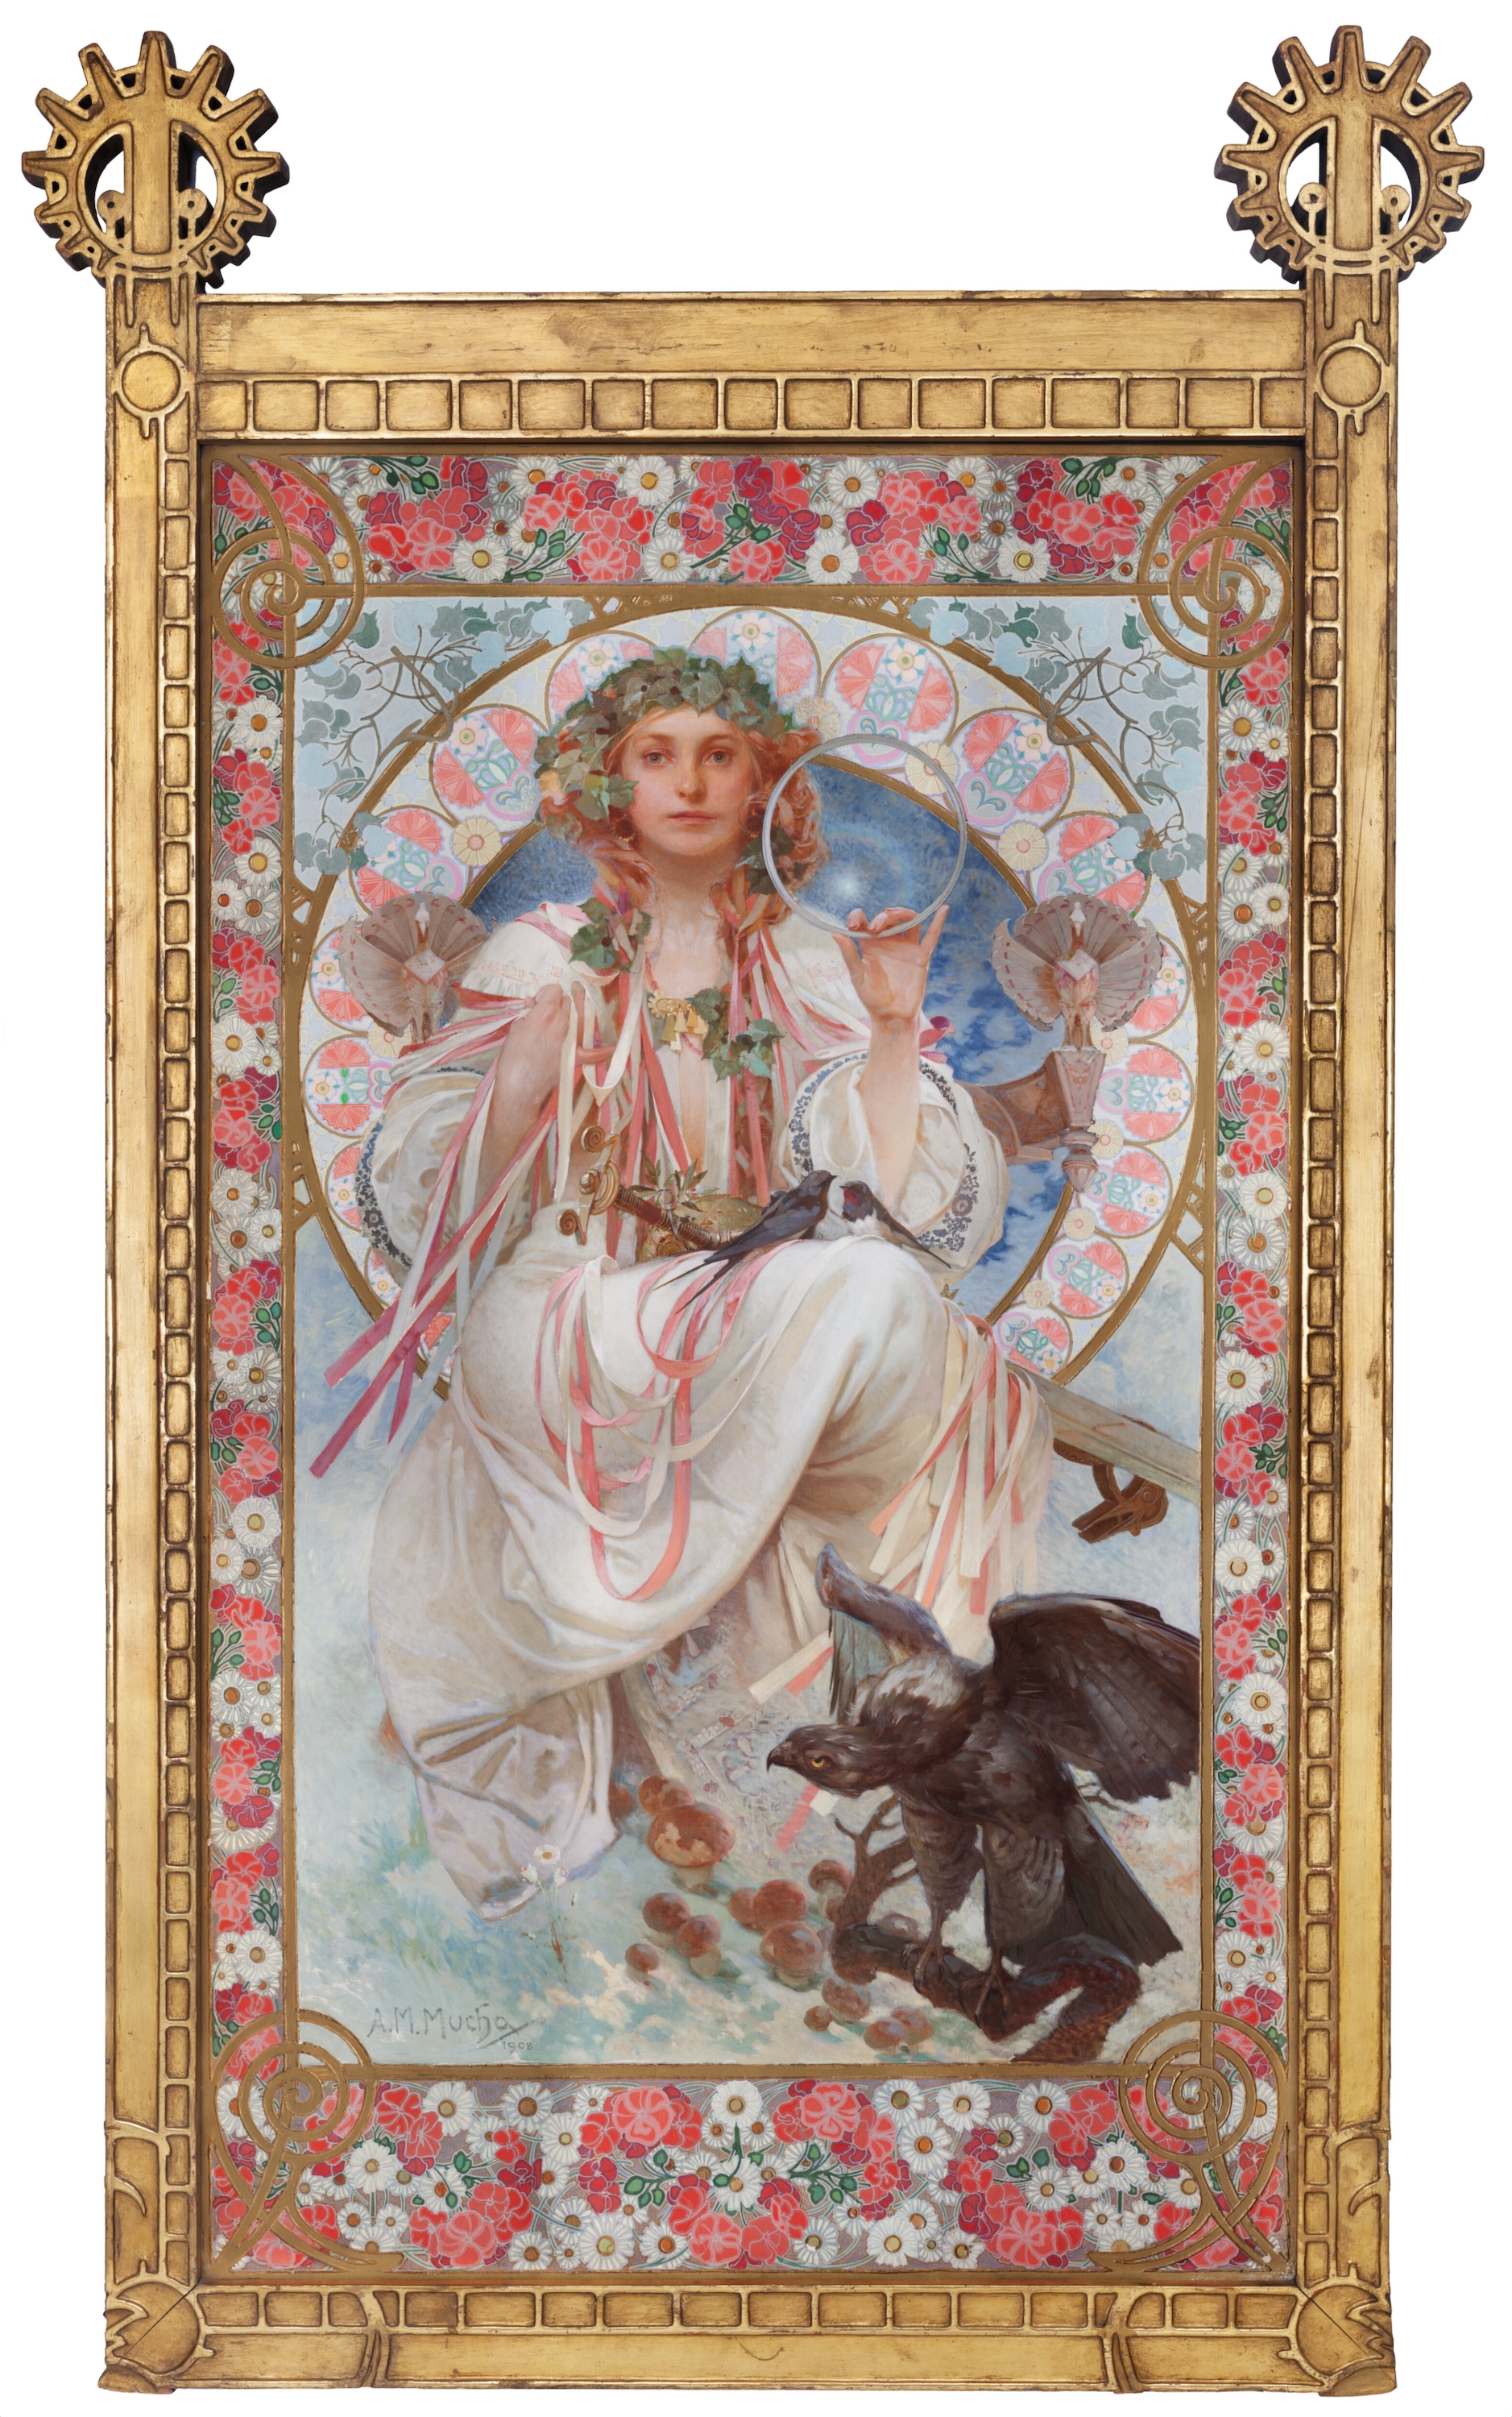 Podobizna Josephine Crane Bradley jako Slávie by Alphonse Mucha - 1908 - 154 x 92,5 cm 